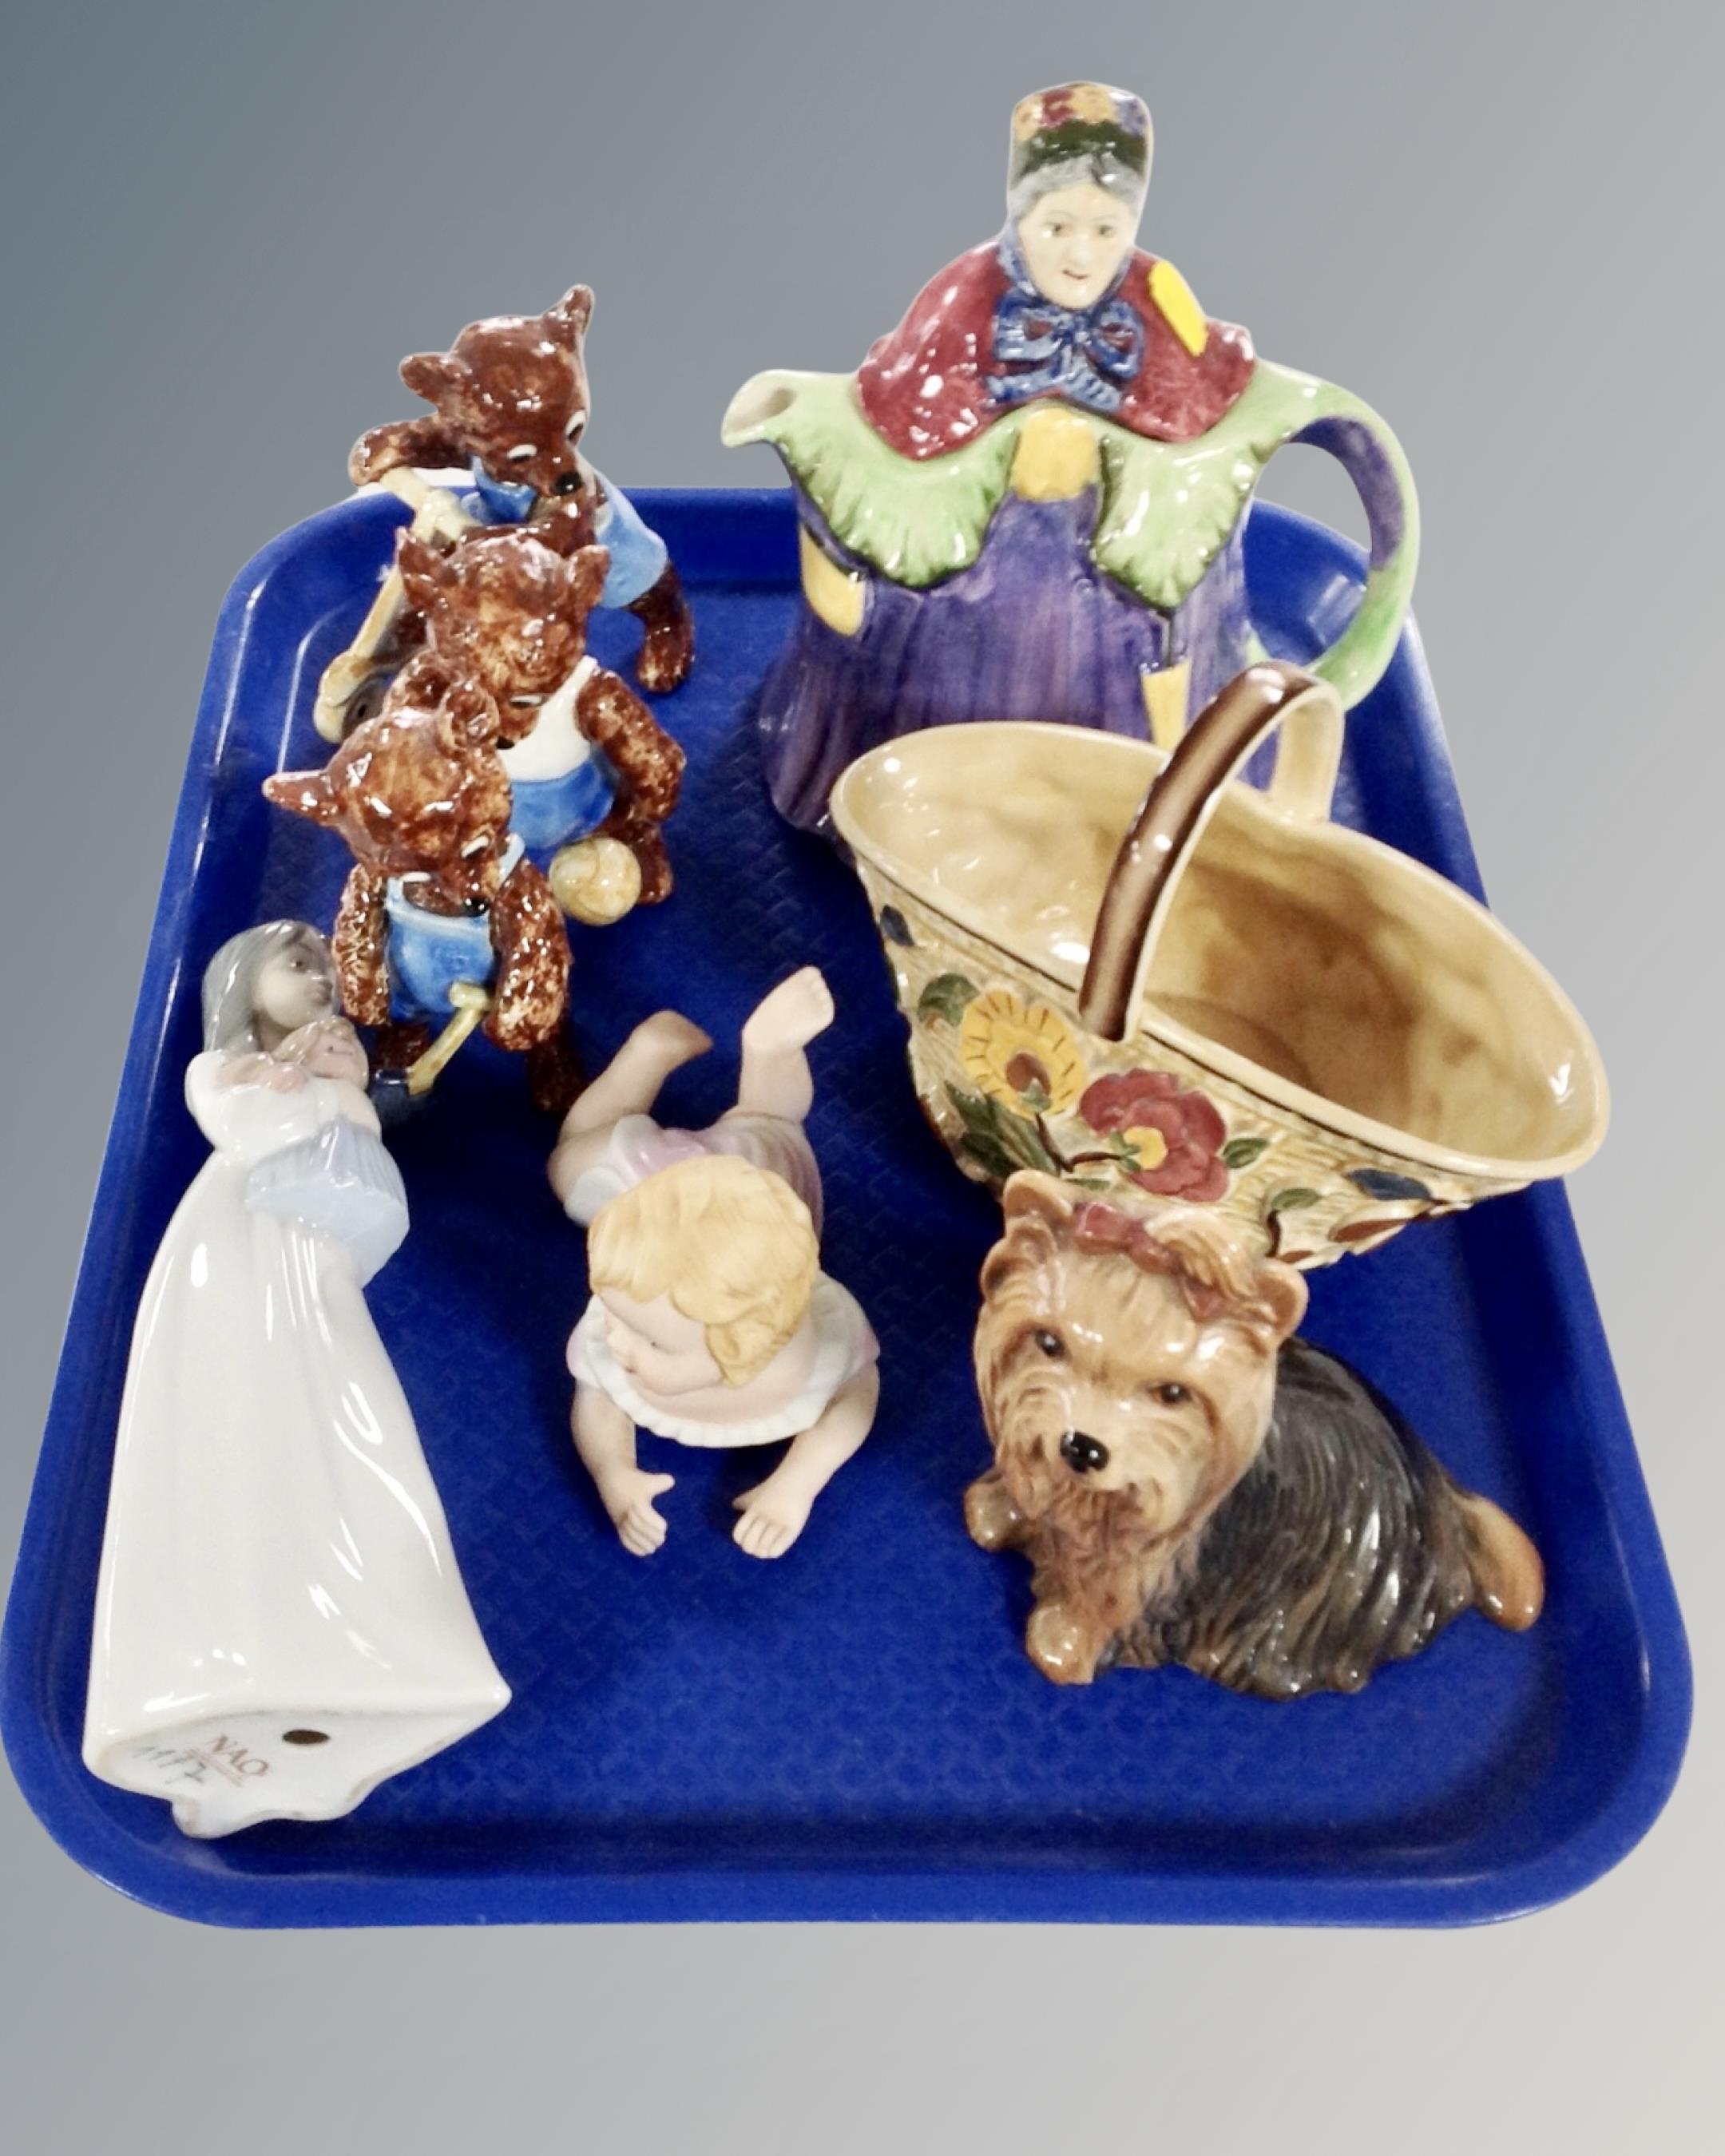 A tray containing assorted ceramics including Nao figure, Goebel teddy bear figures,